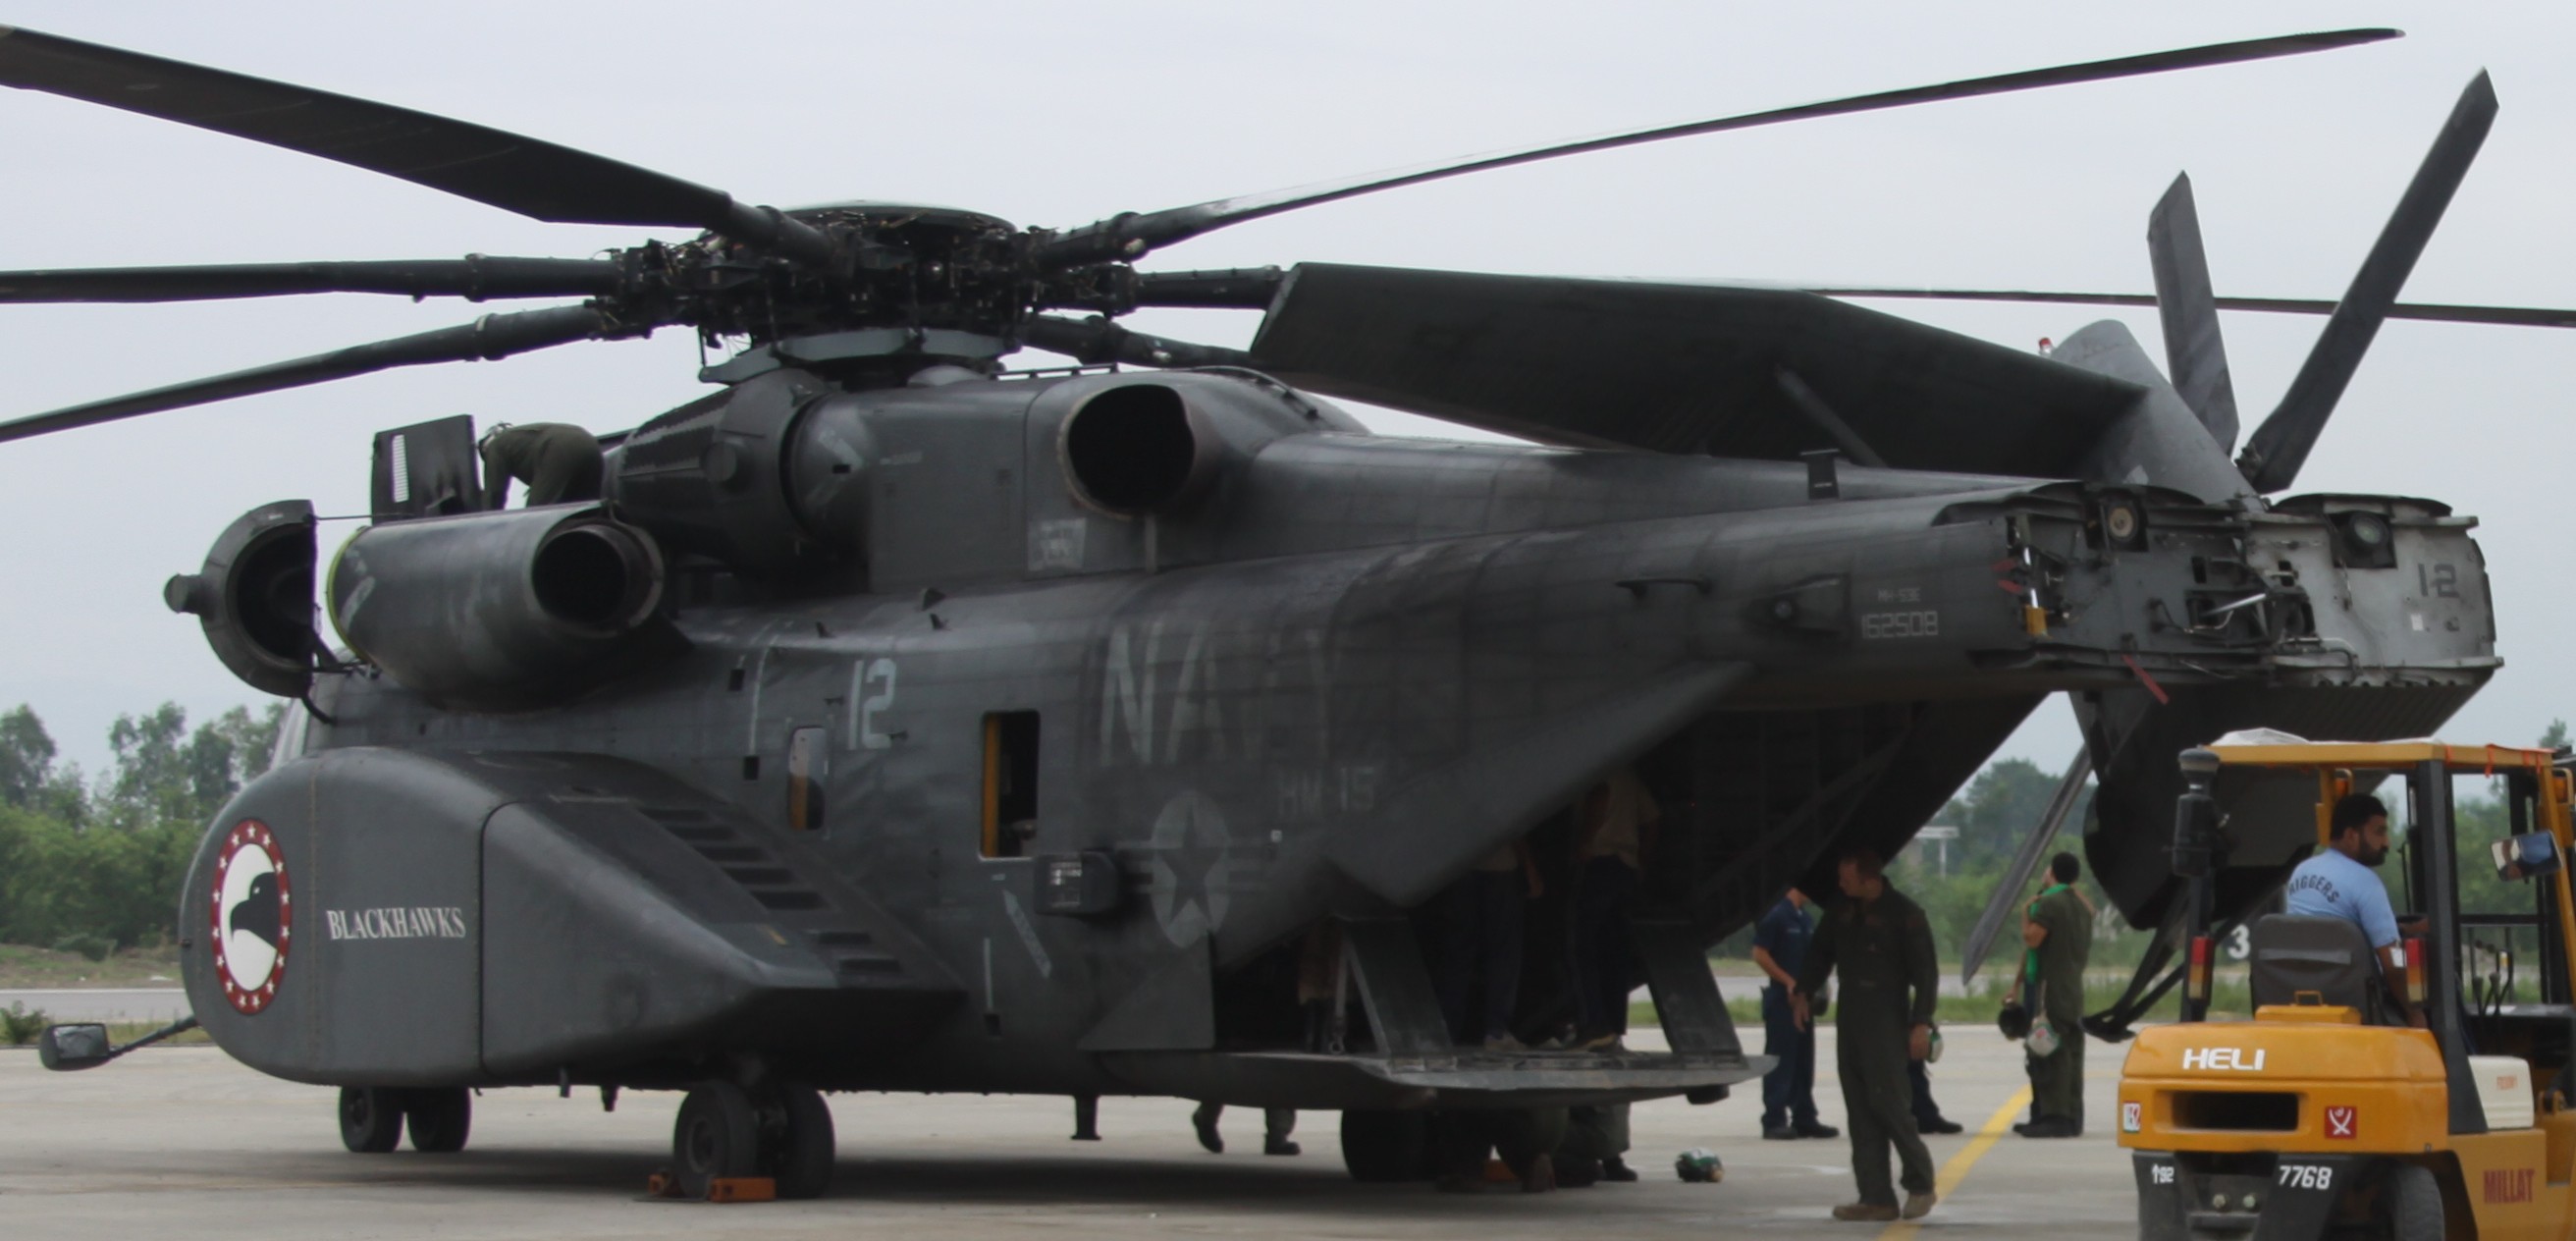 hm-15 blackhawks helicopter mine countermeasures squadron navy mh-53e sea dragon 120 pakistan